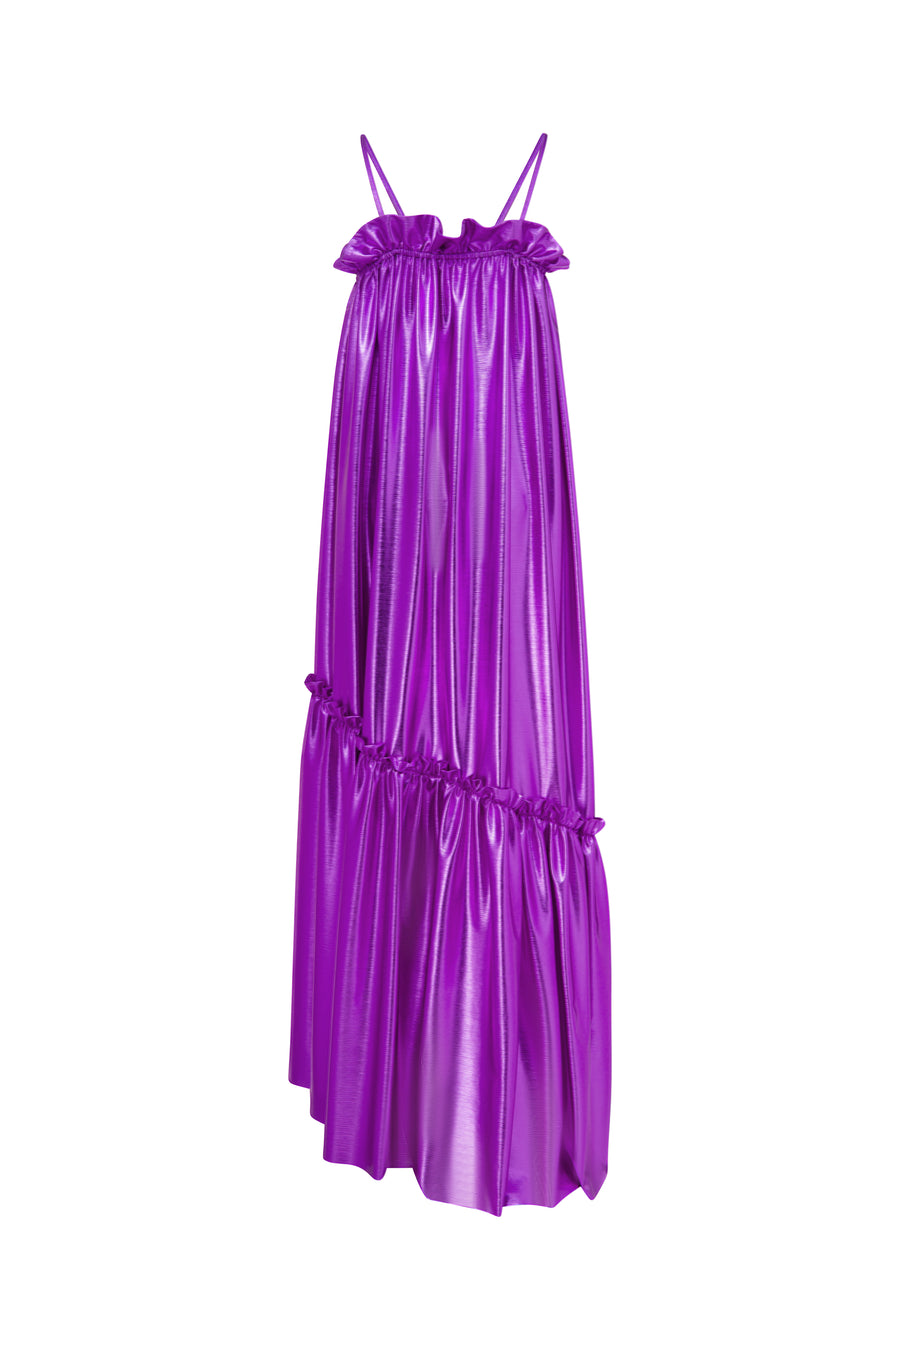 Metallic Strapless Floor Length Dress